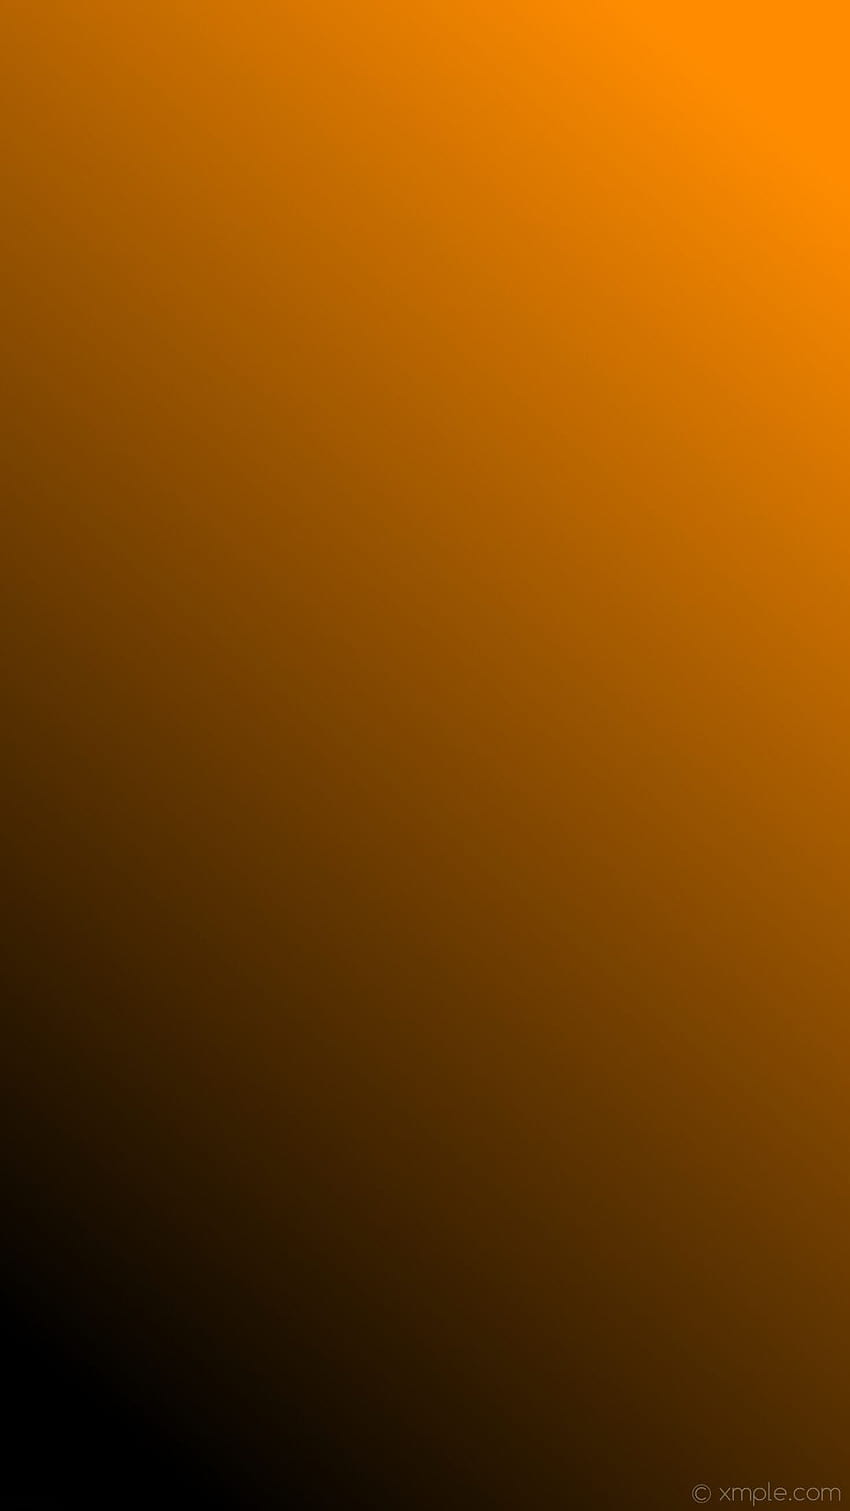 Degradado Naranja Negro Lineal Naranja oscuro - Gris oscuro y naranja - -, Marrón oscuro Degradado fondo de pantalla del teléfono